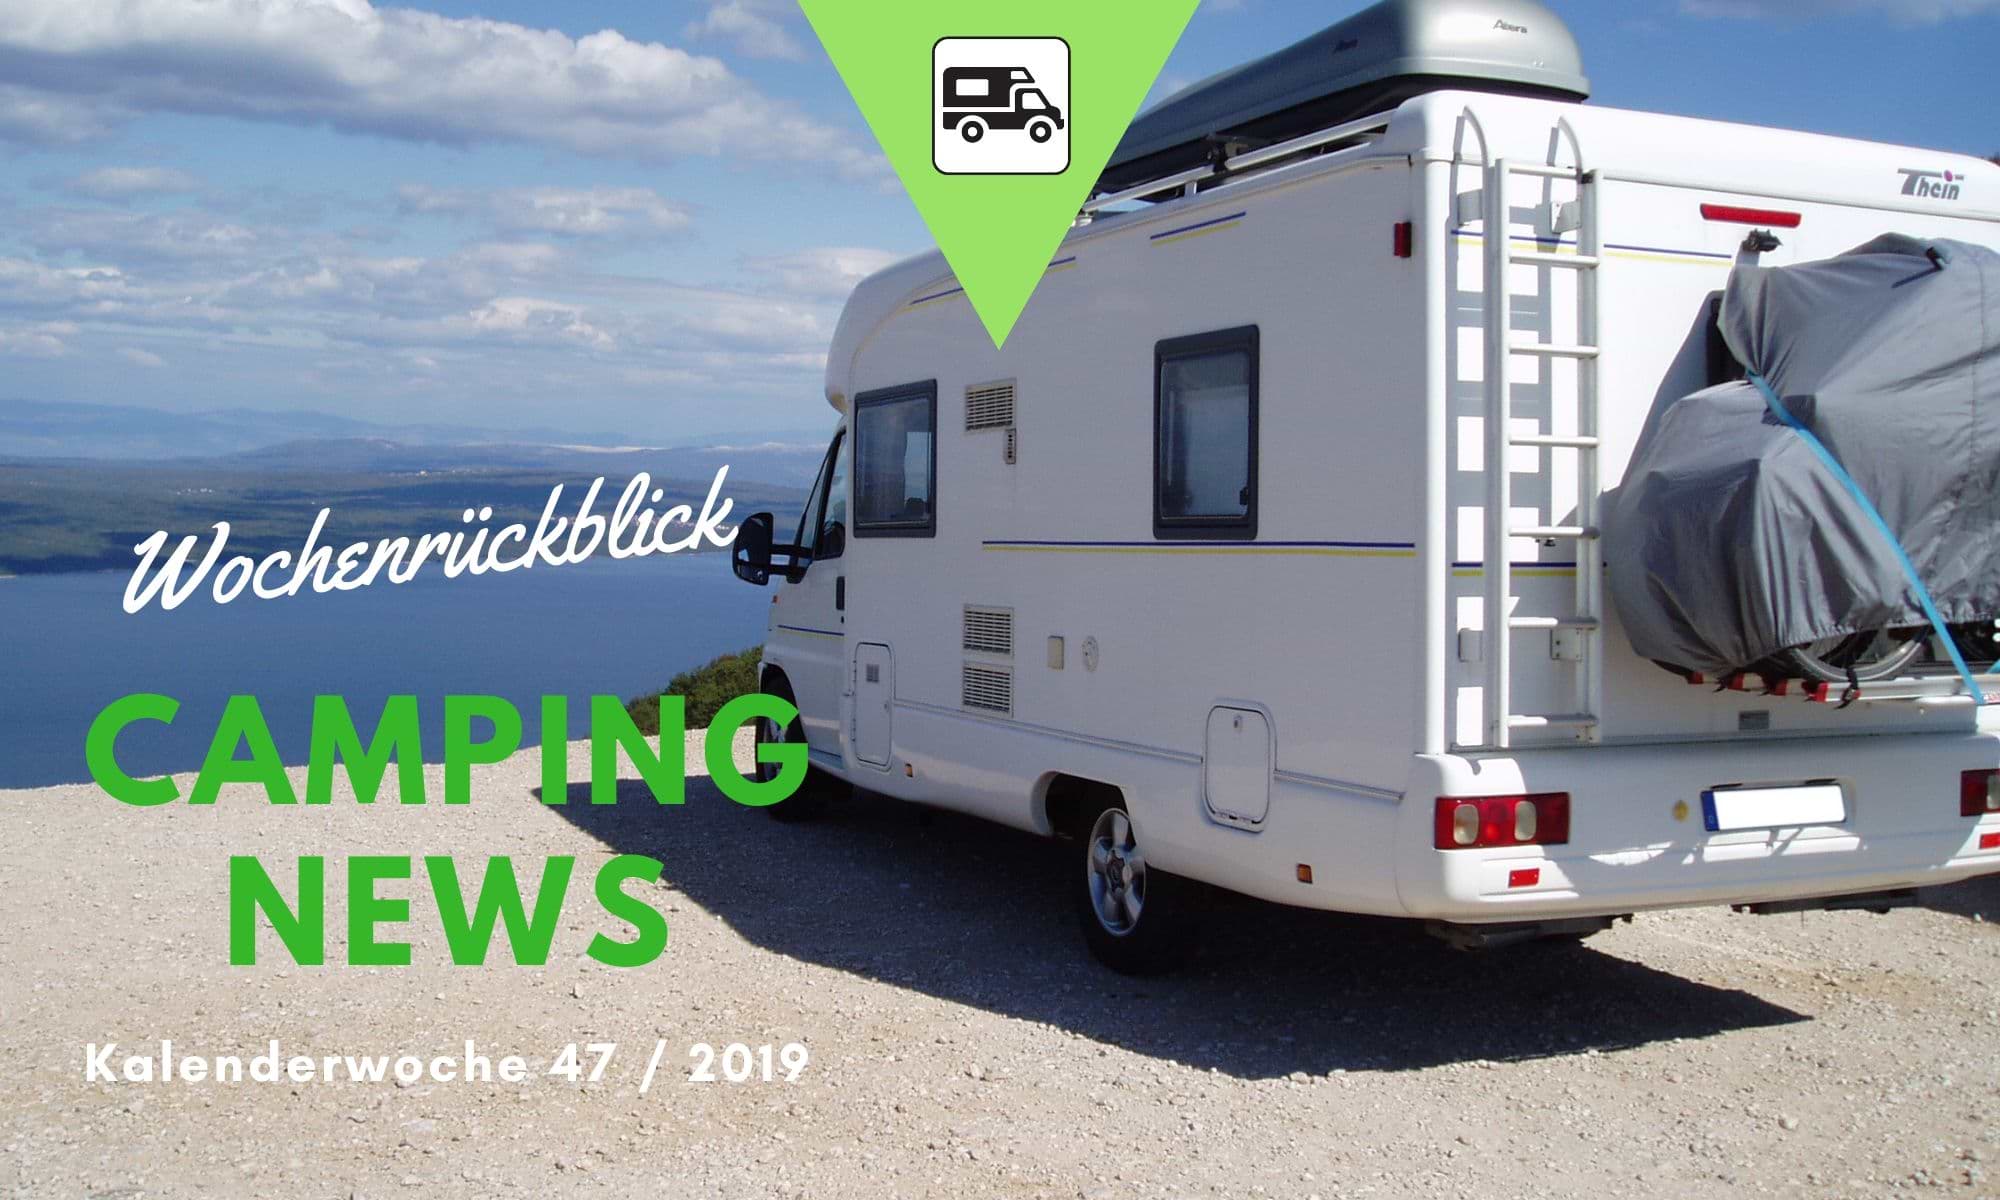 Wochenrückblick Camping News KW47-2019